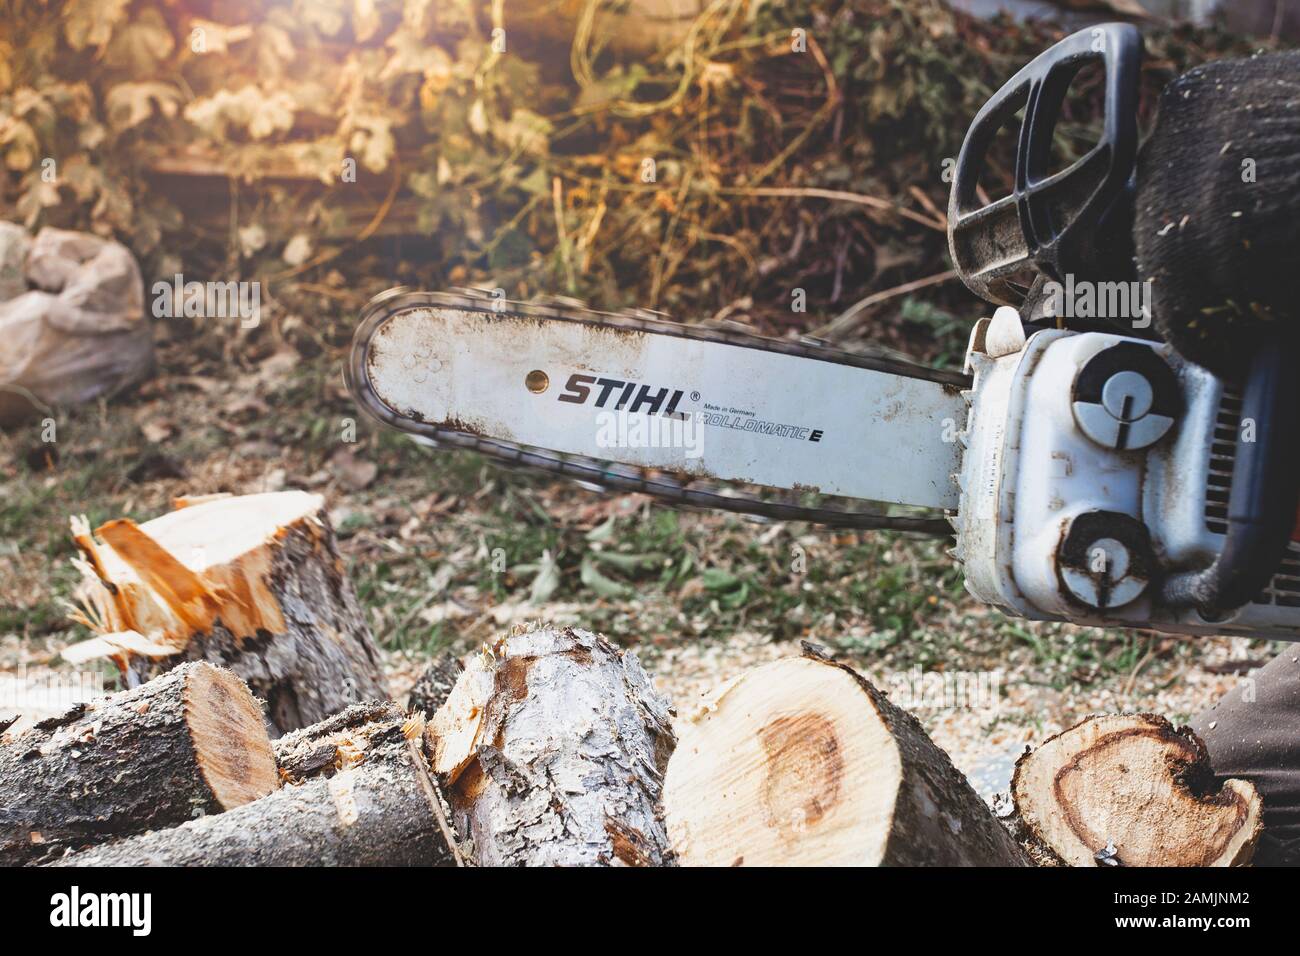 Kiev region, Ukraine - 2019-10-05. A man sawing firewood with a Stihl saw, close-up. Stock Photo